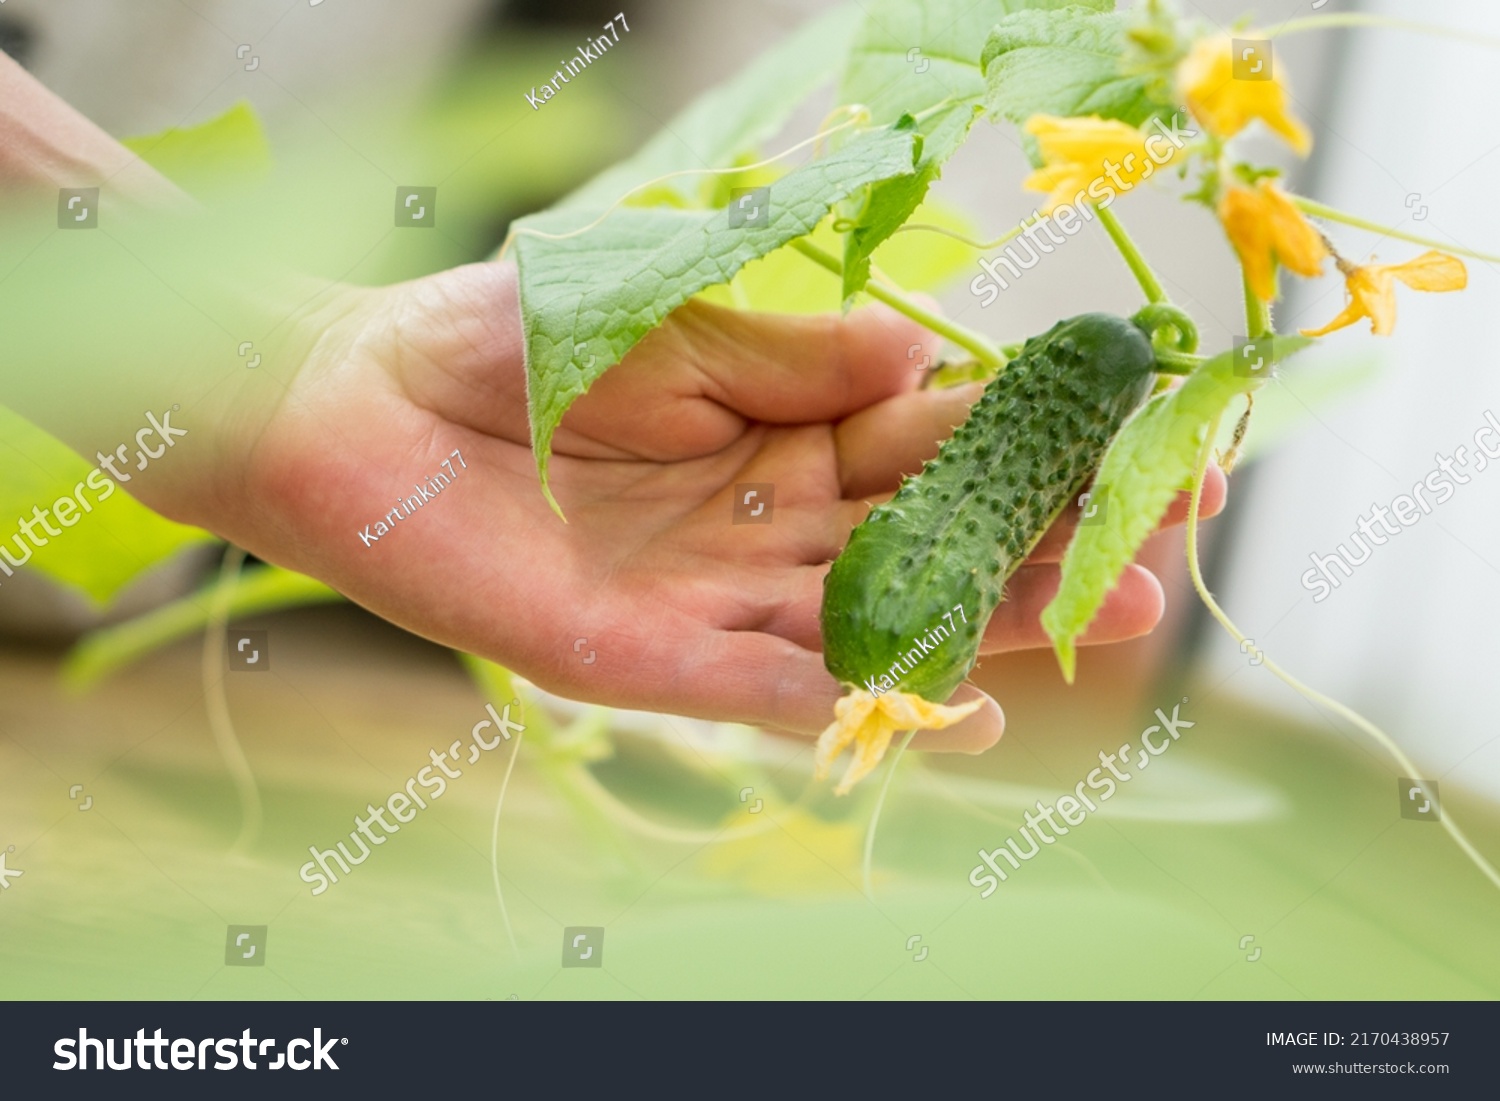 Hands holding small growing cucumber in urban home garden. Urban home gardening concept #2170438957